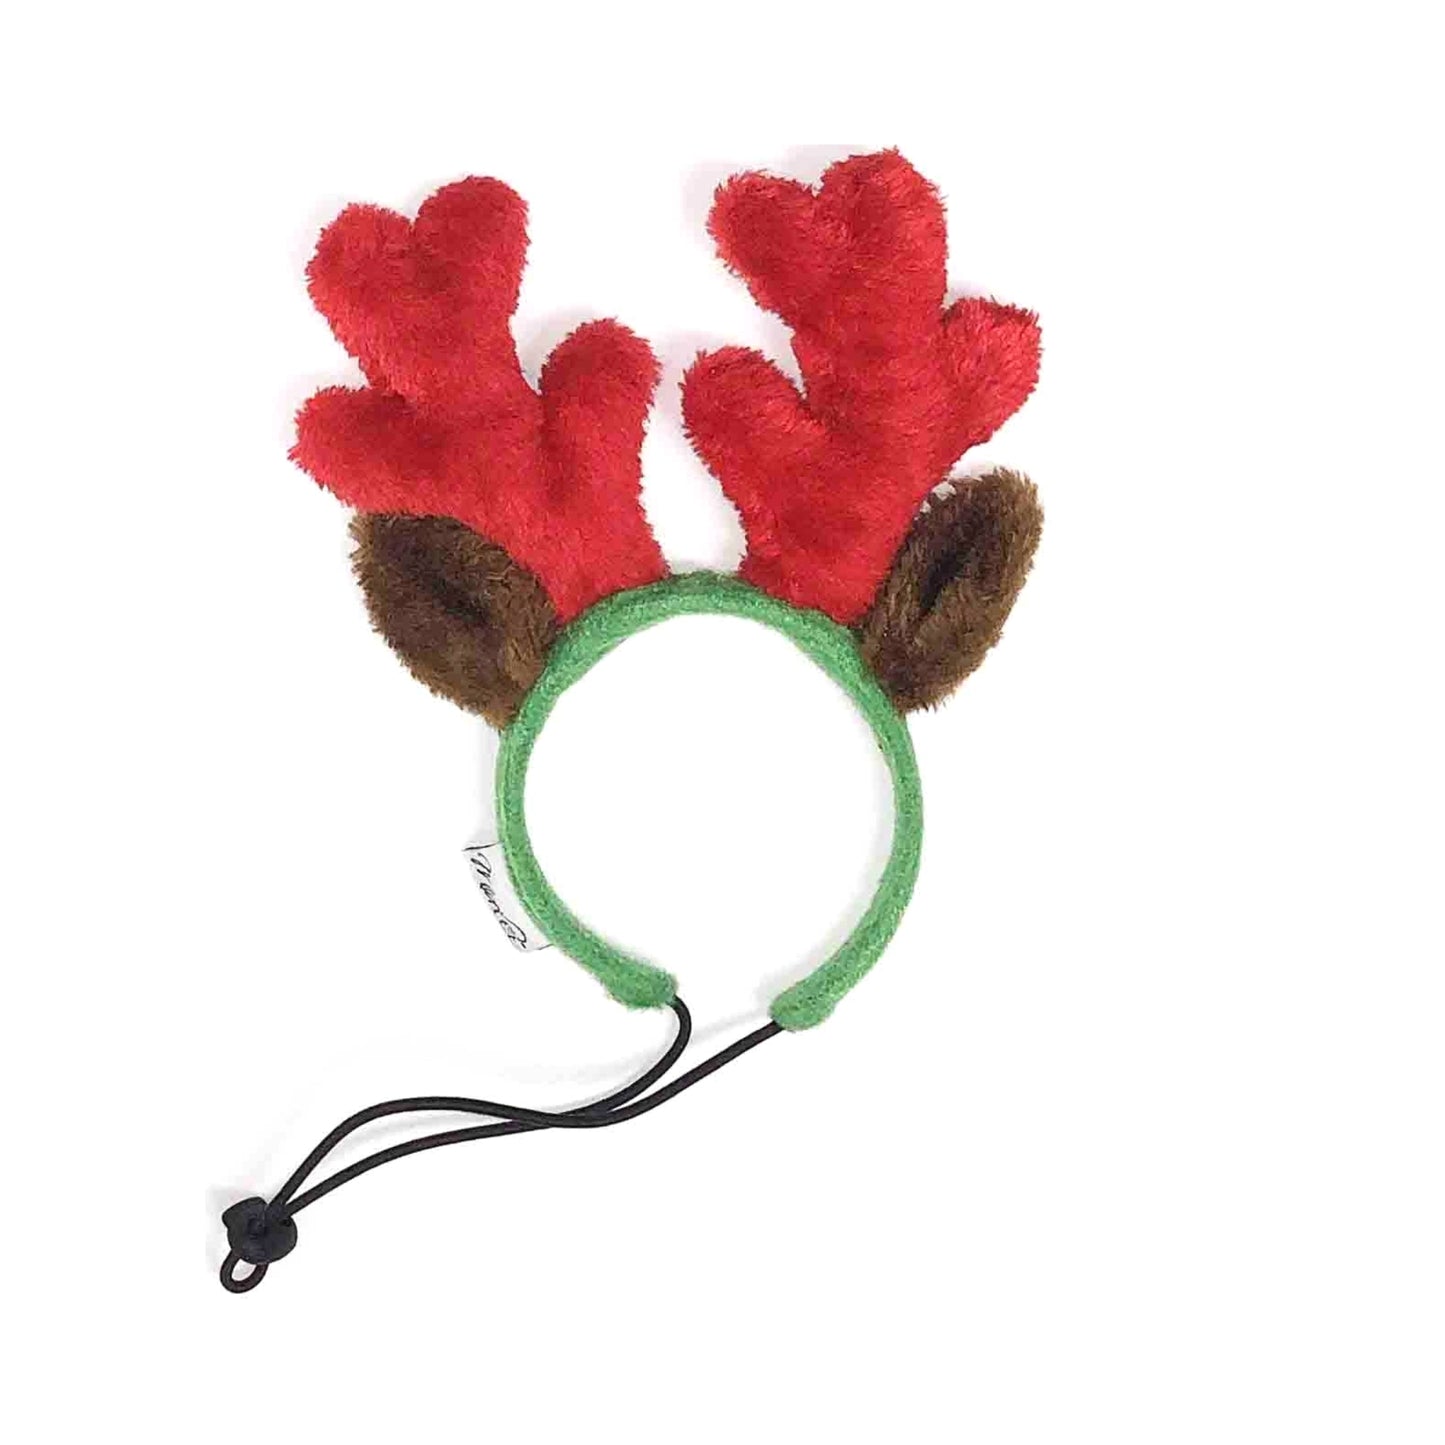 Midlee Filled Dog Stocking- Reindeer Antlers and 10 Mini Tennis Balls